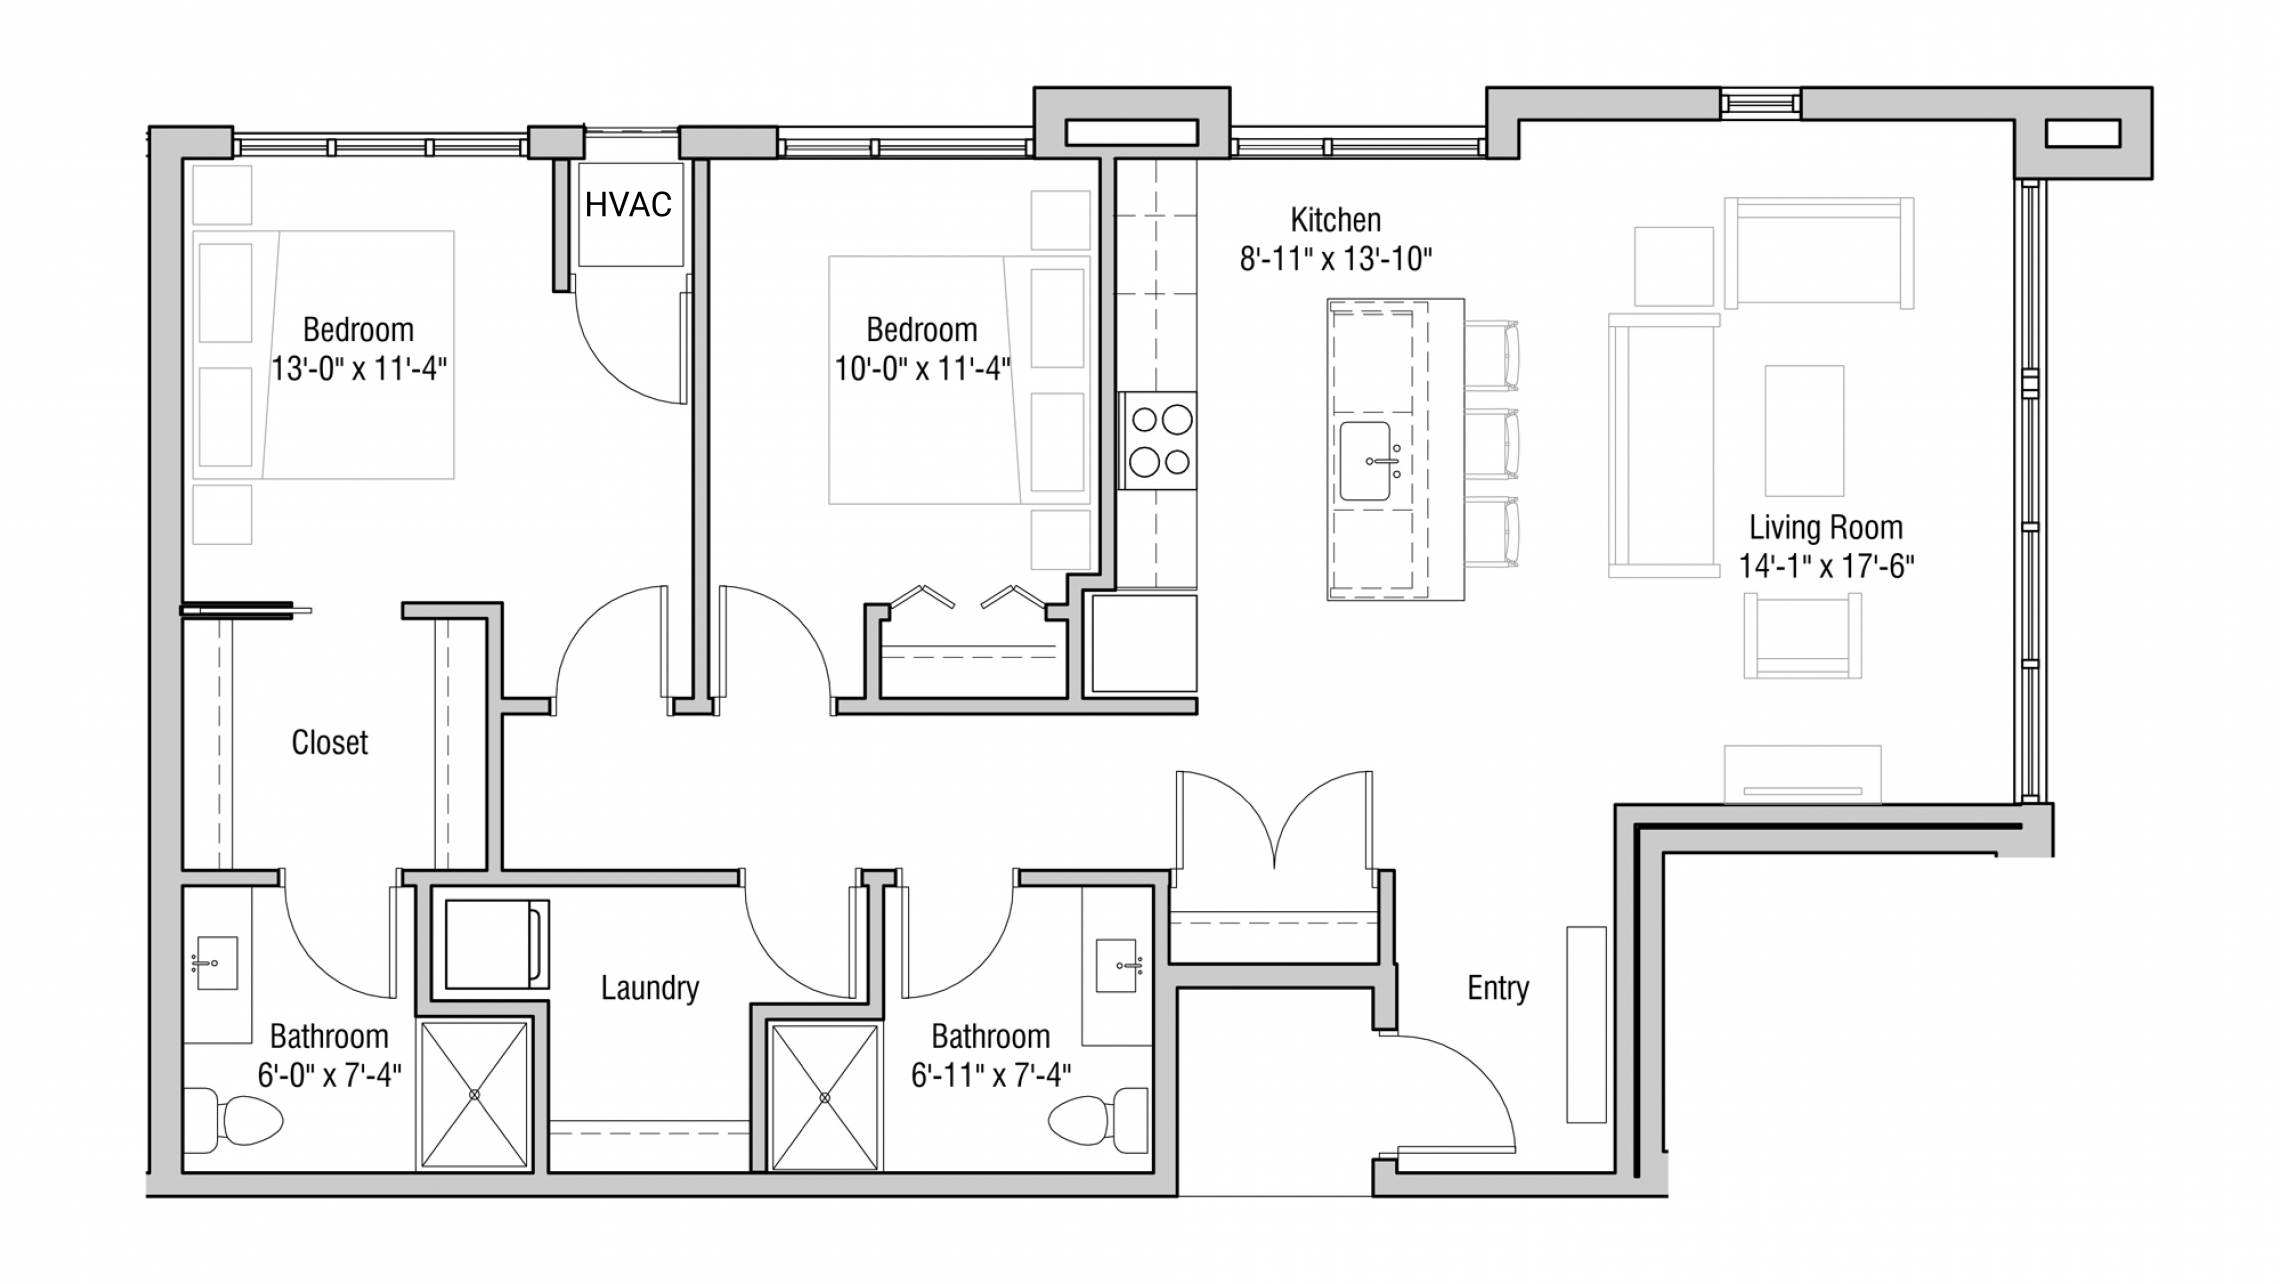 ULI Quarter Row 315 - Two Bedroom, Two Bathroom